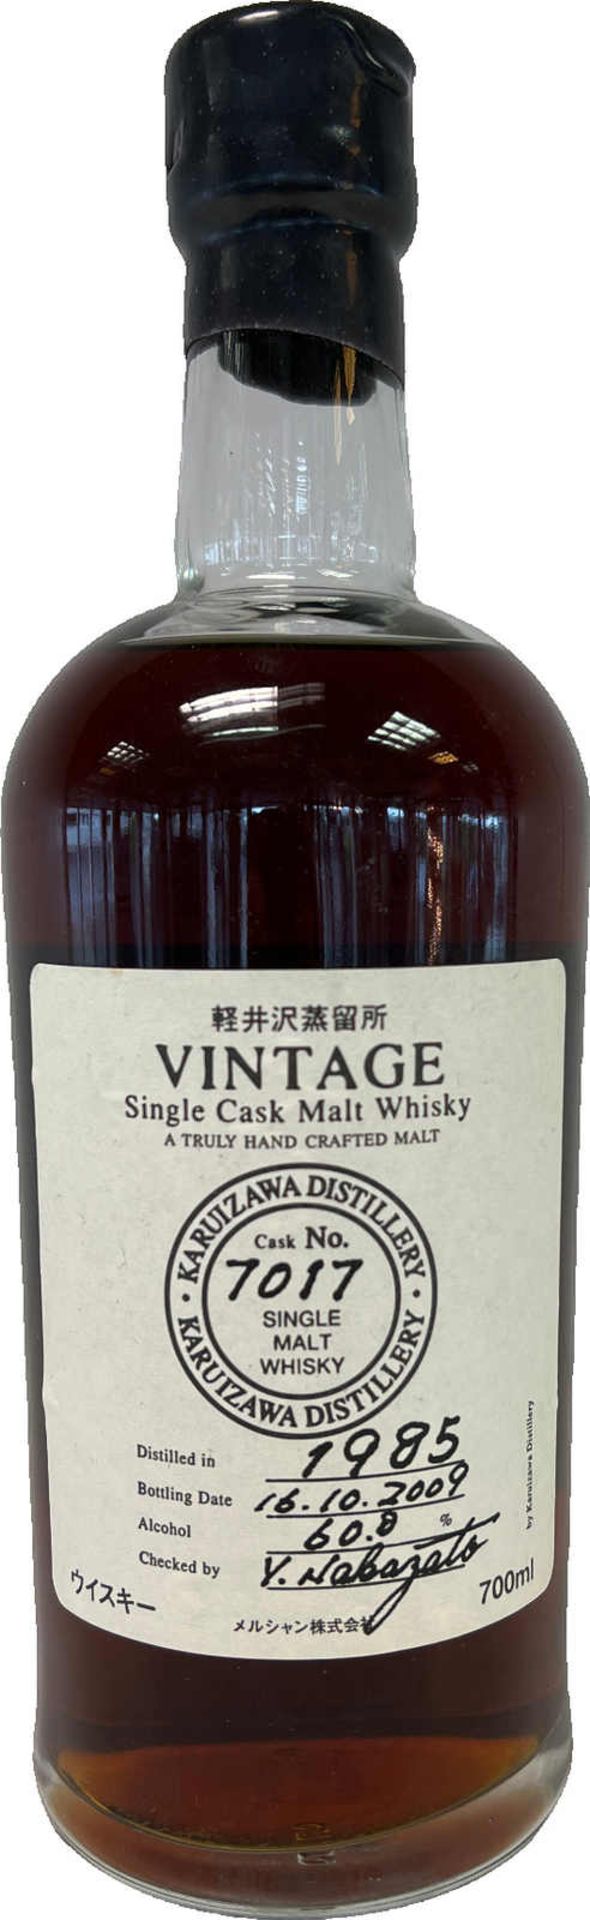 Karuizawa Karuizawa Distillery, Vintage, Single Cask Malt Whisky Jahrgang 1985, Fassnummer 7017.